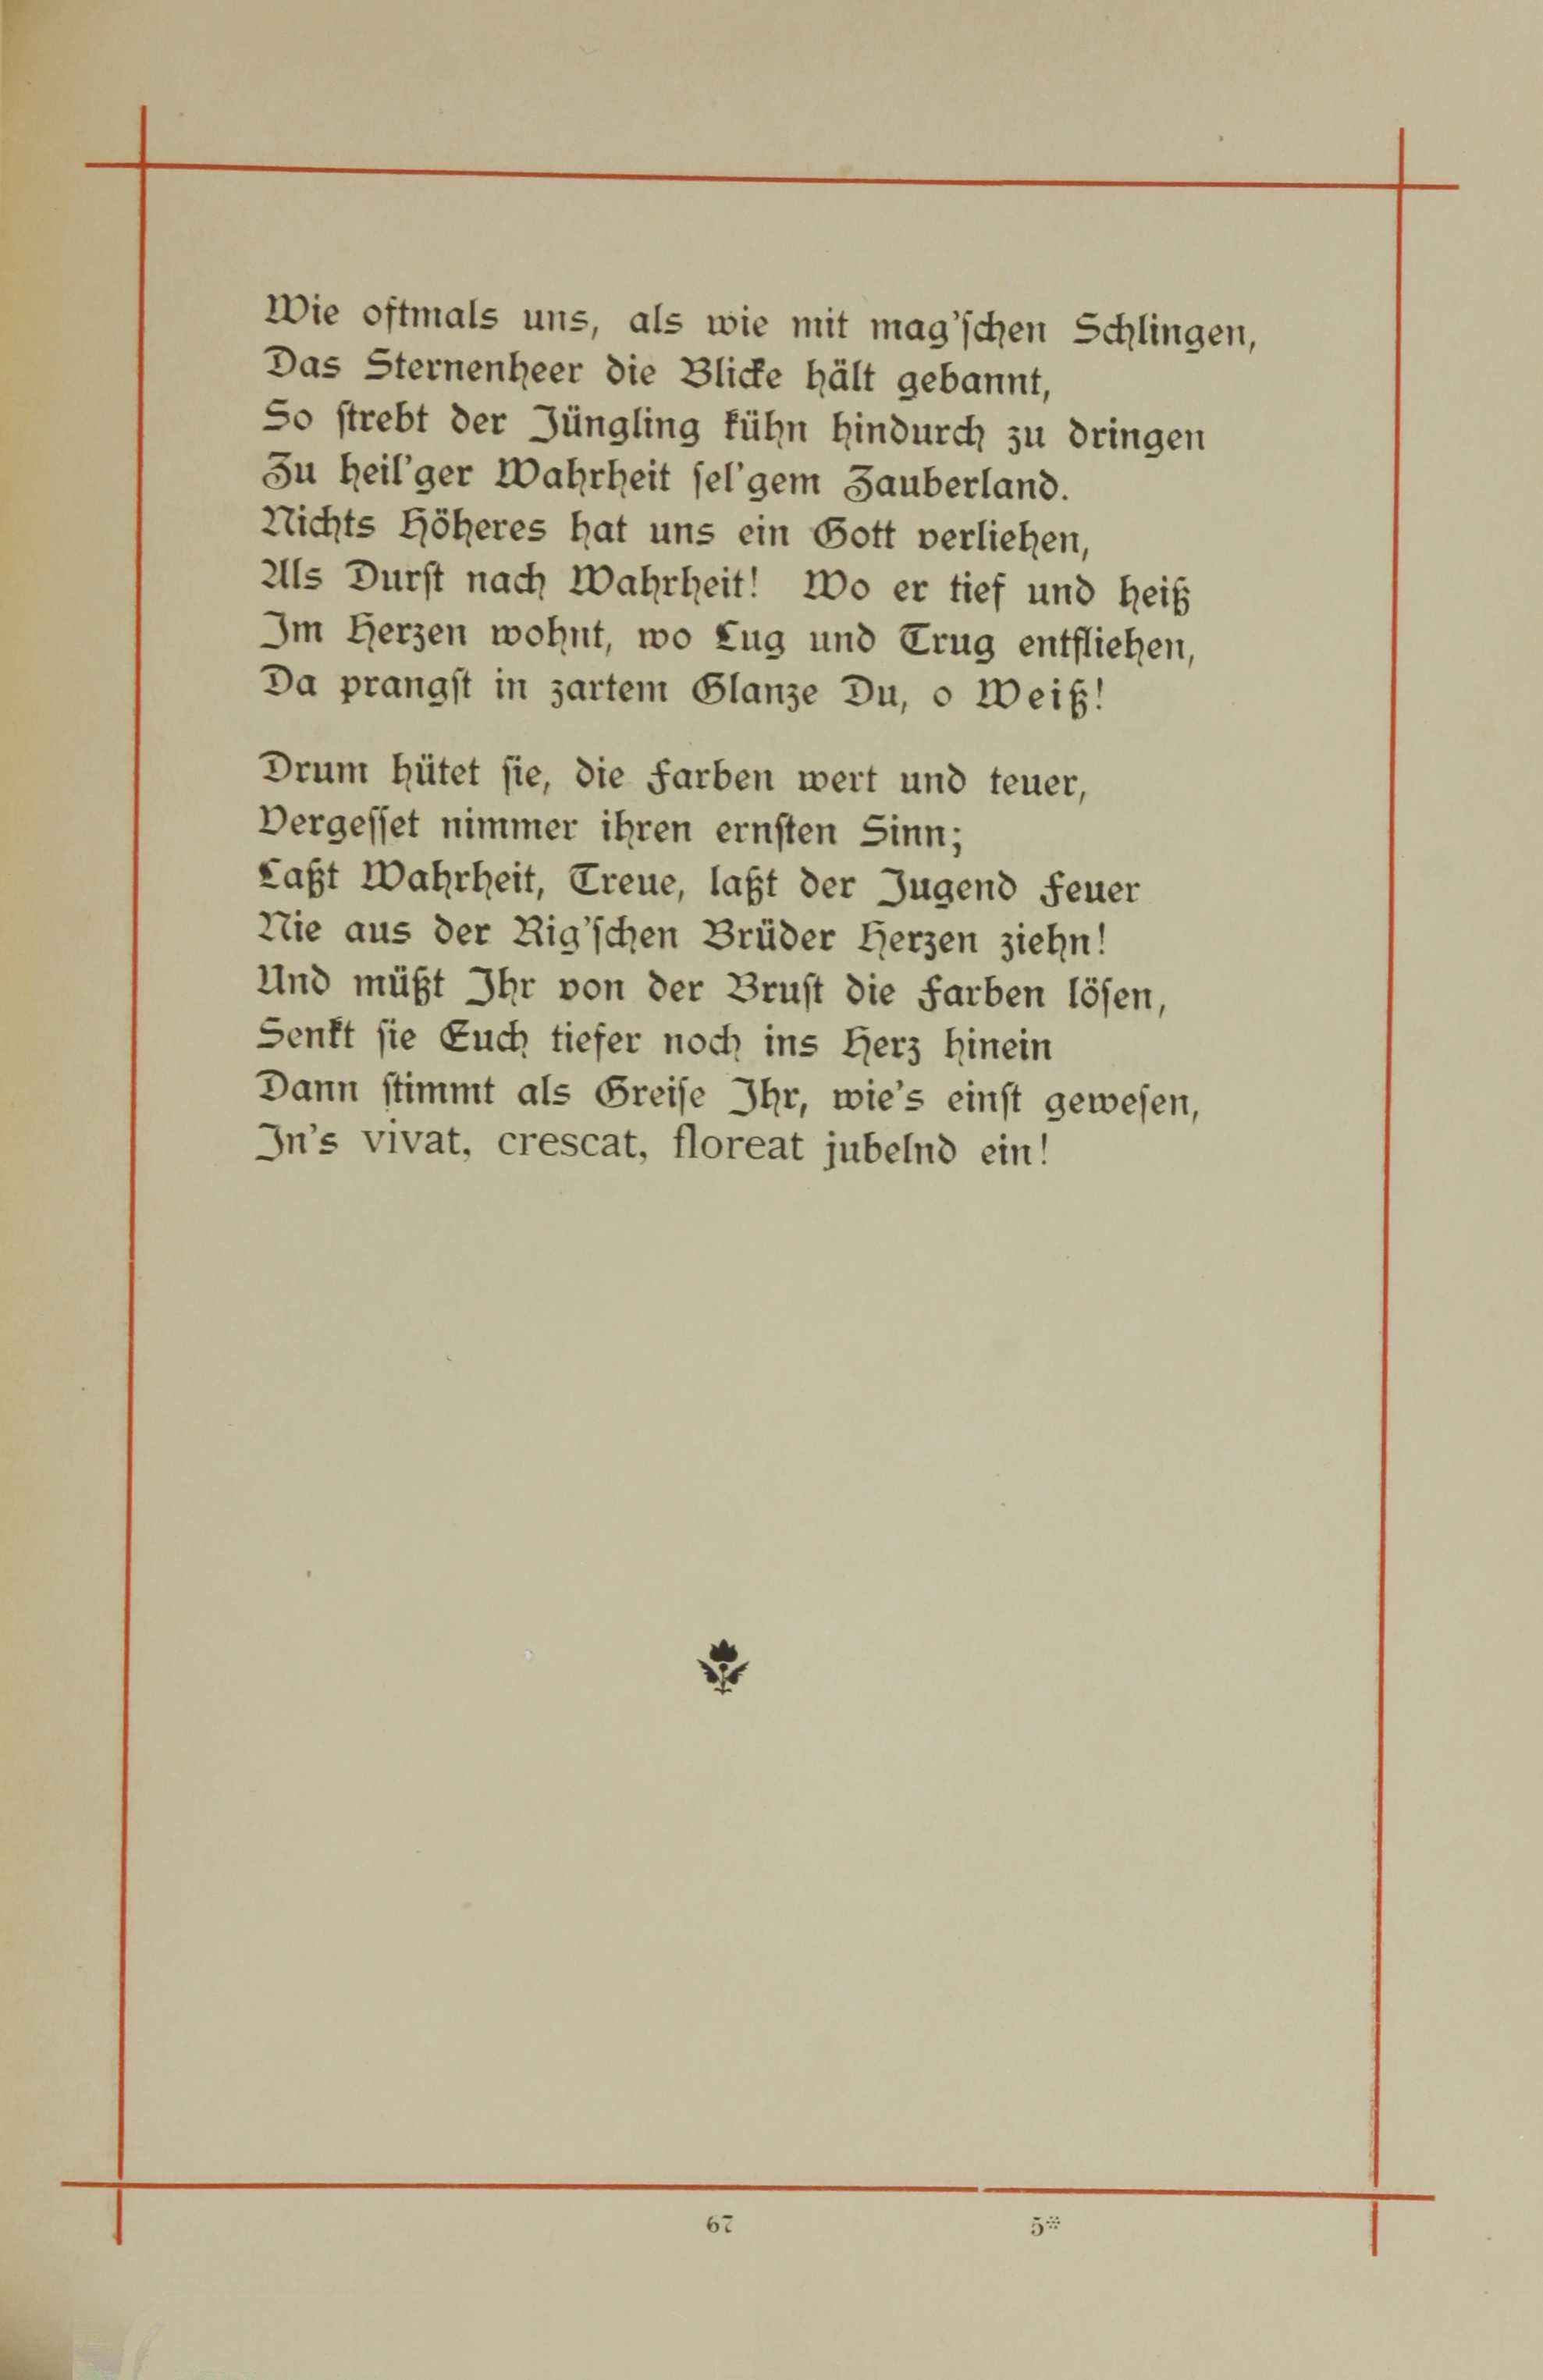 Erinnerung an die Fraternitas (1893) | 72. (67) Main body of text